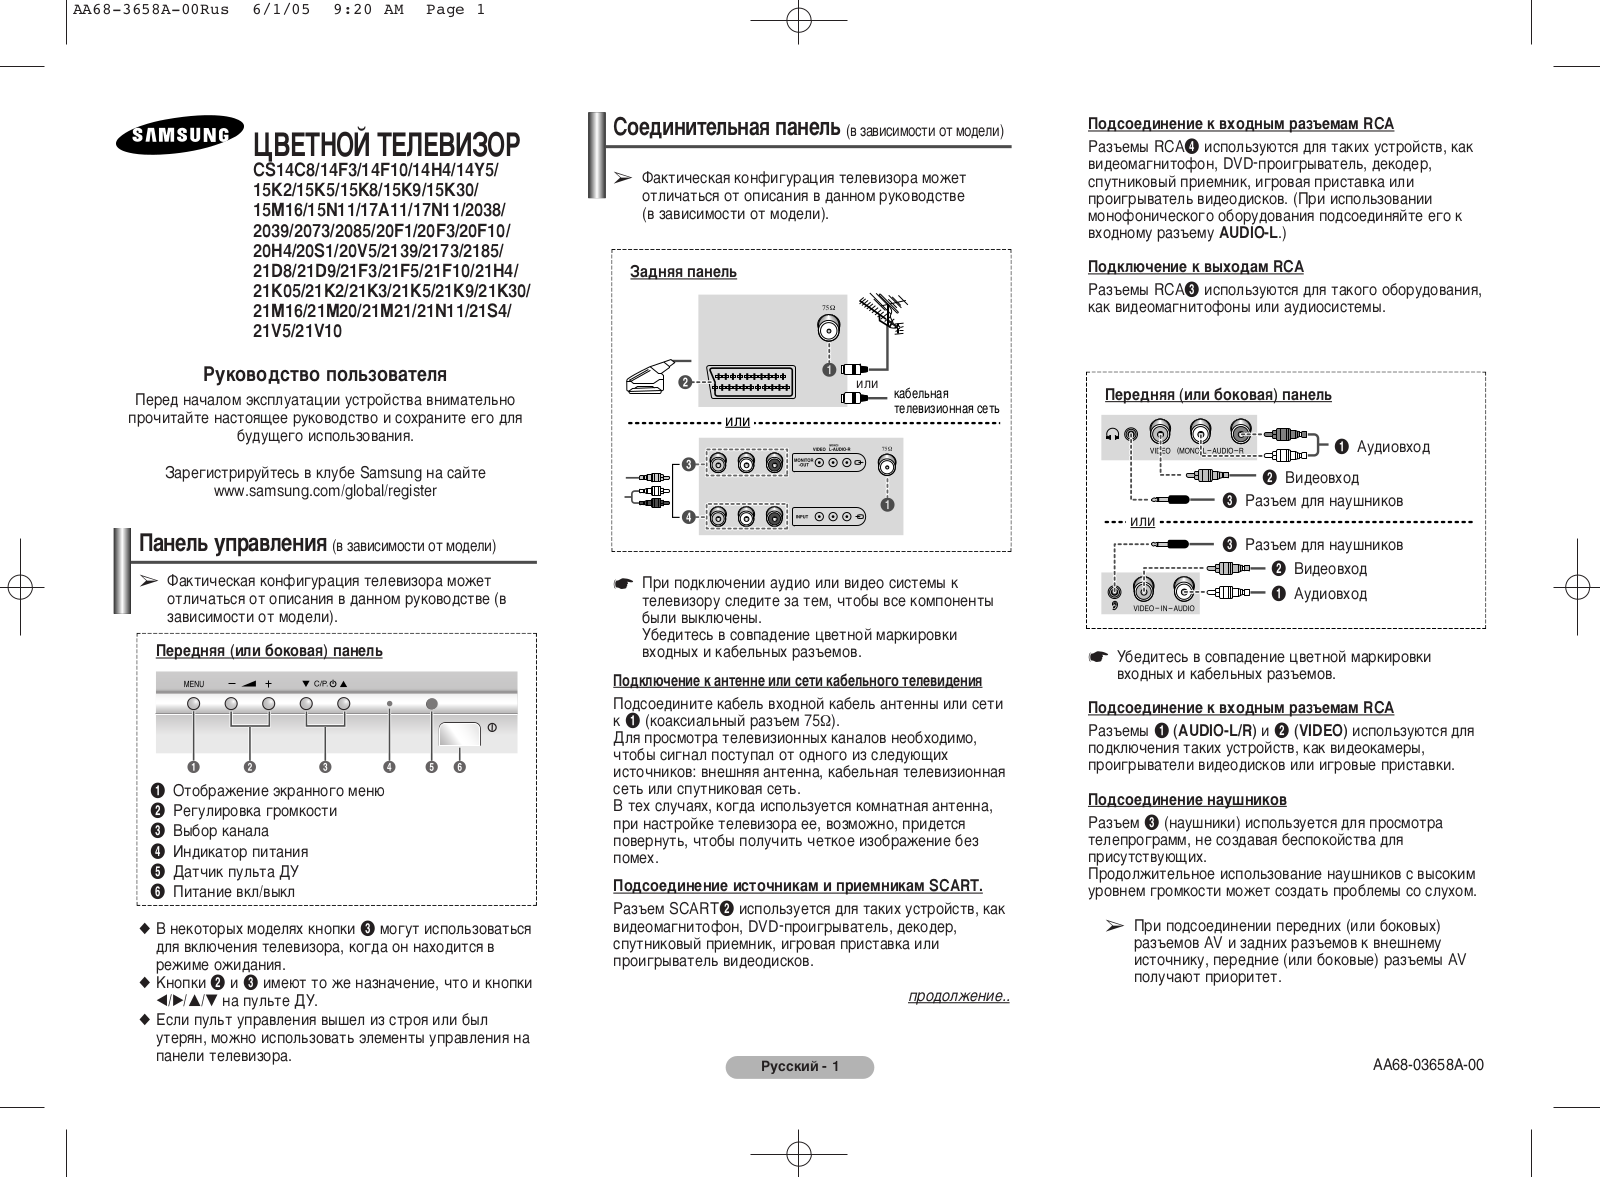 Samsung CS-21К30 User Manual